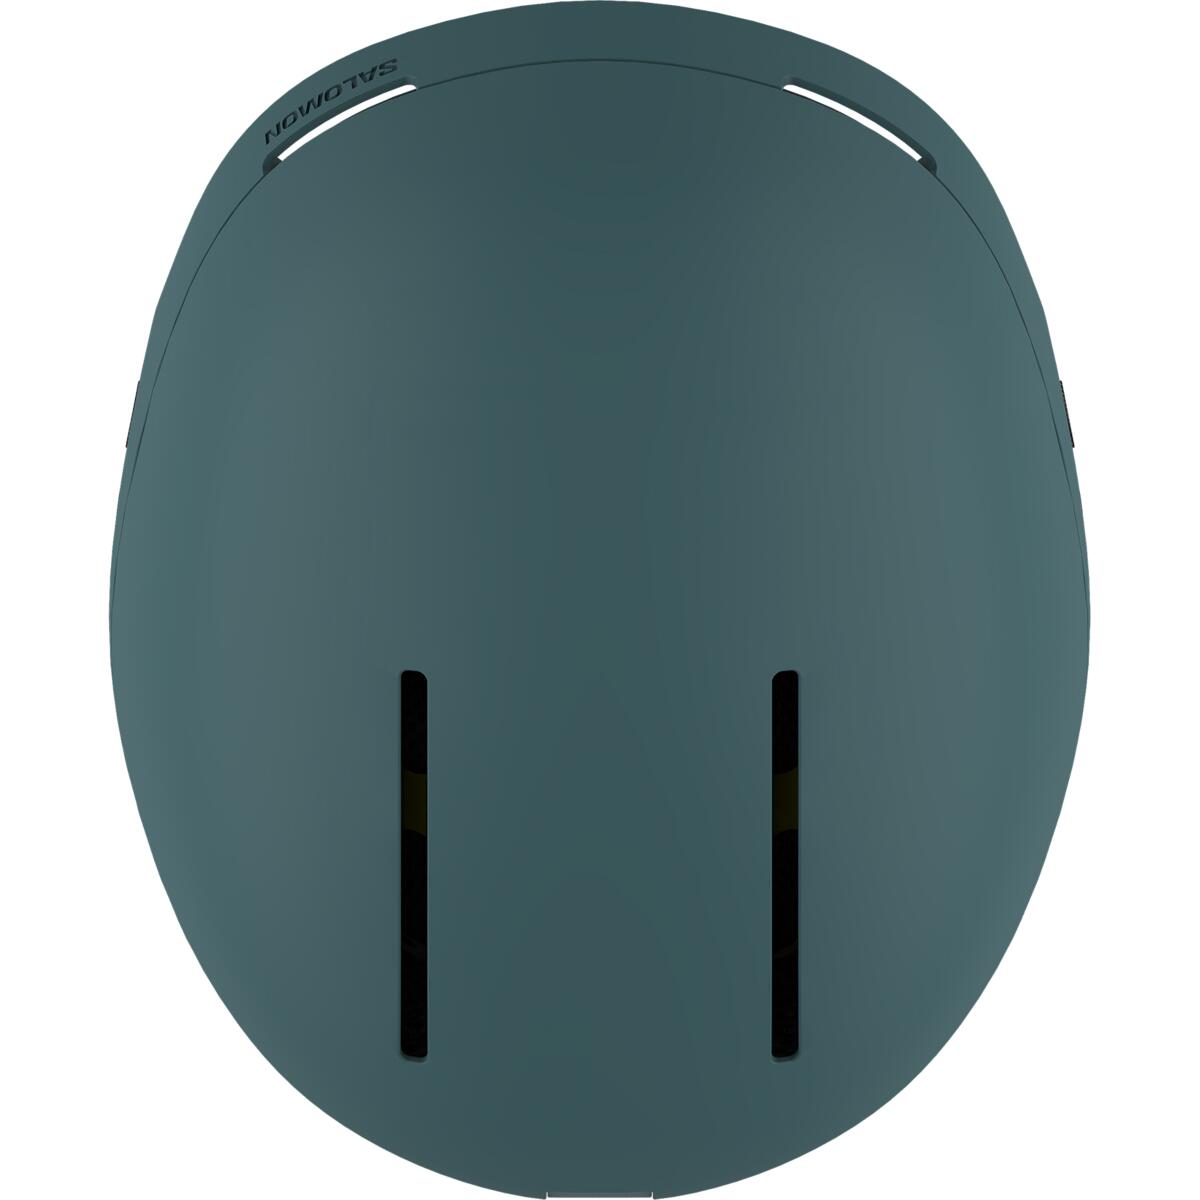 Salomon Brigade MIPS Helmet